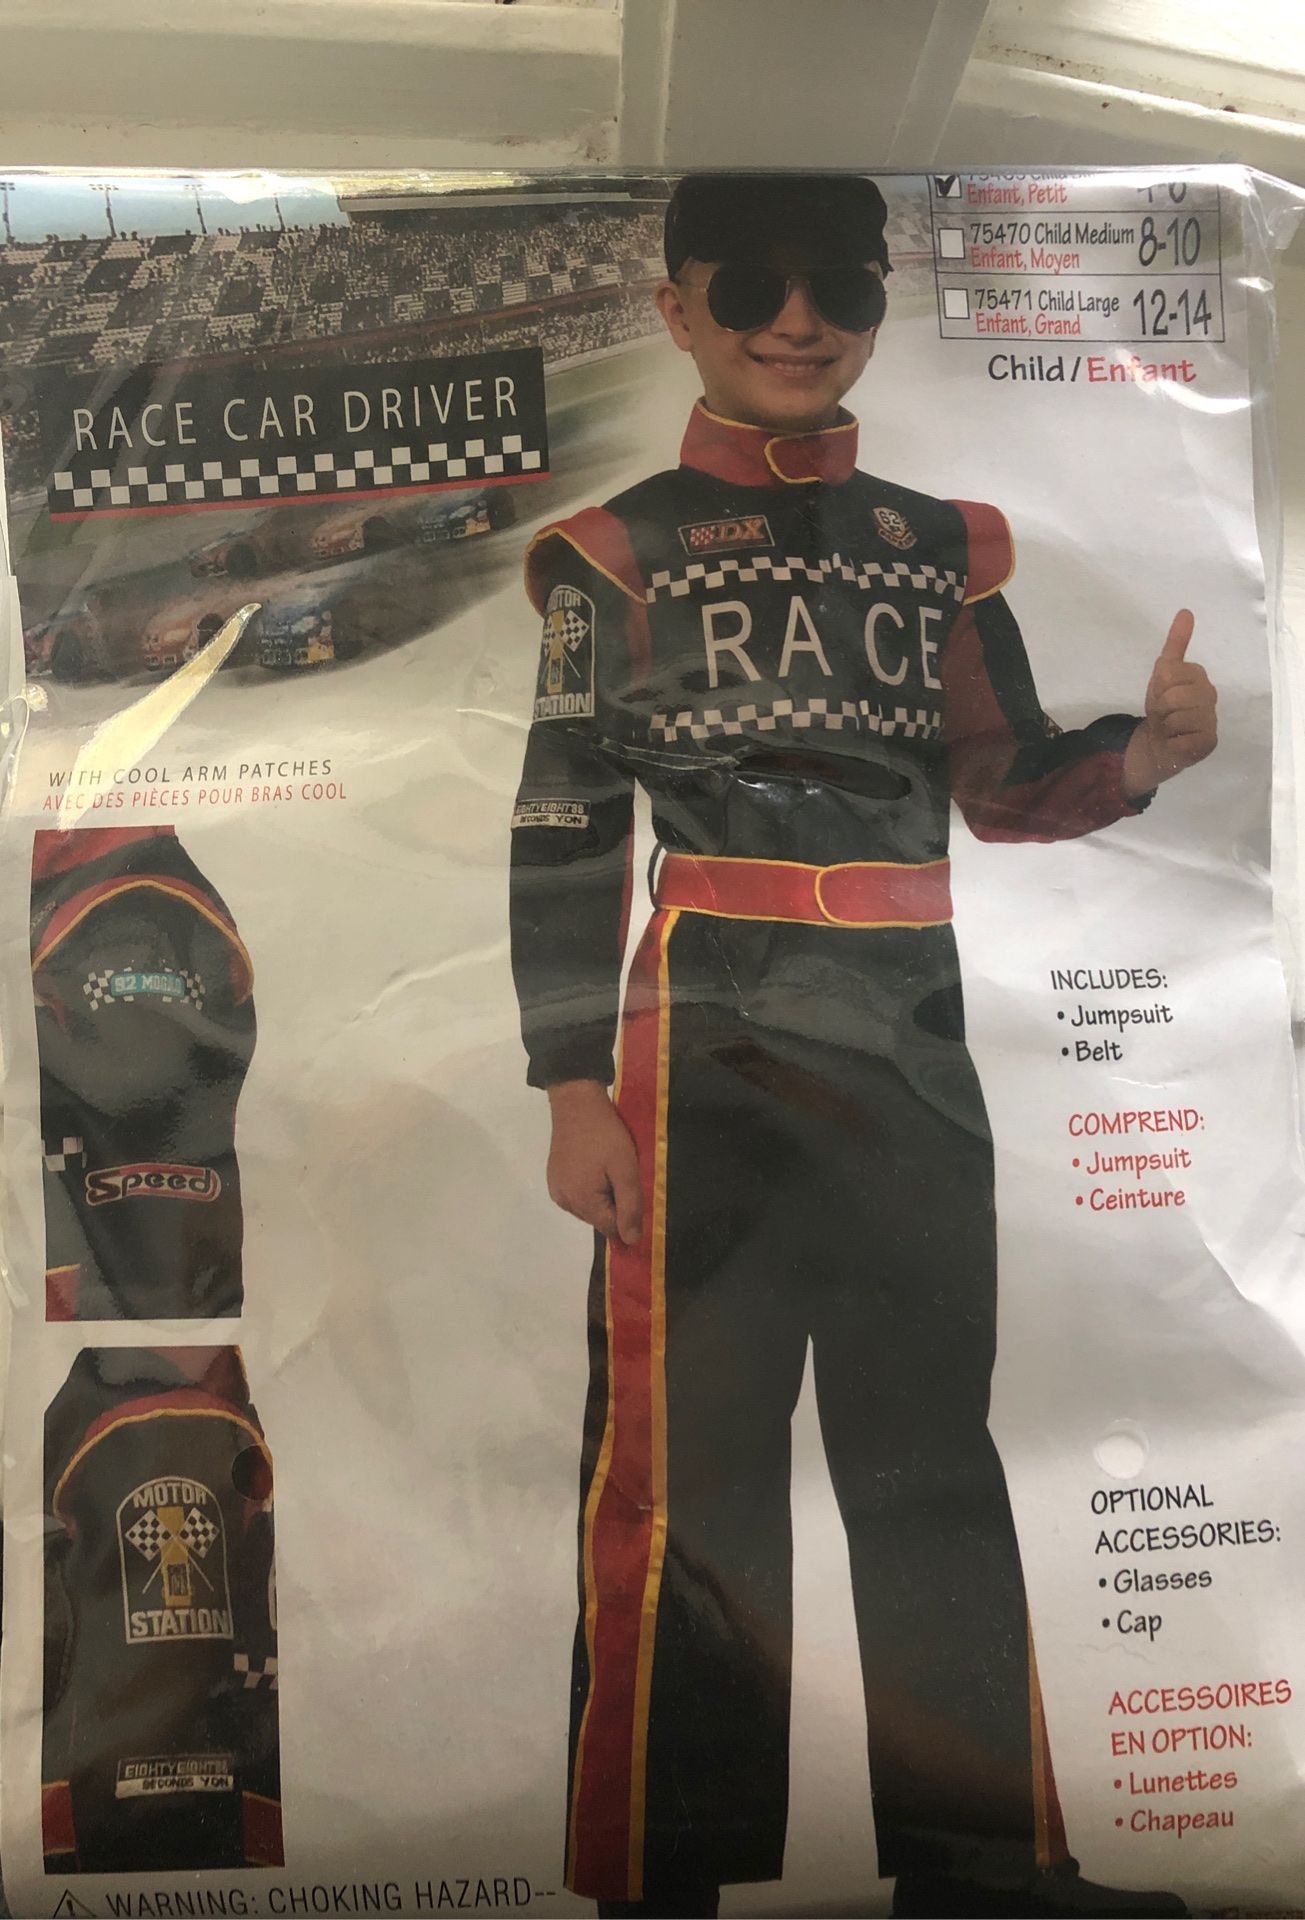 Race car driver costume